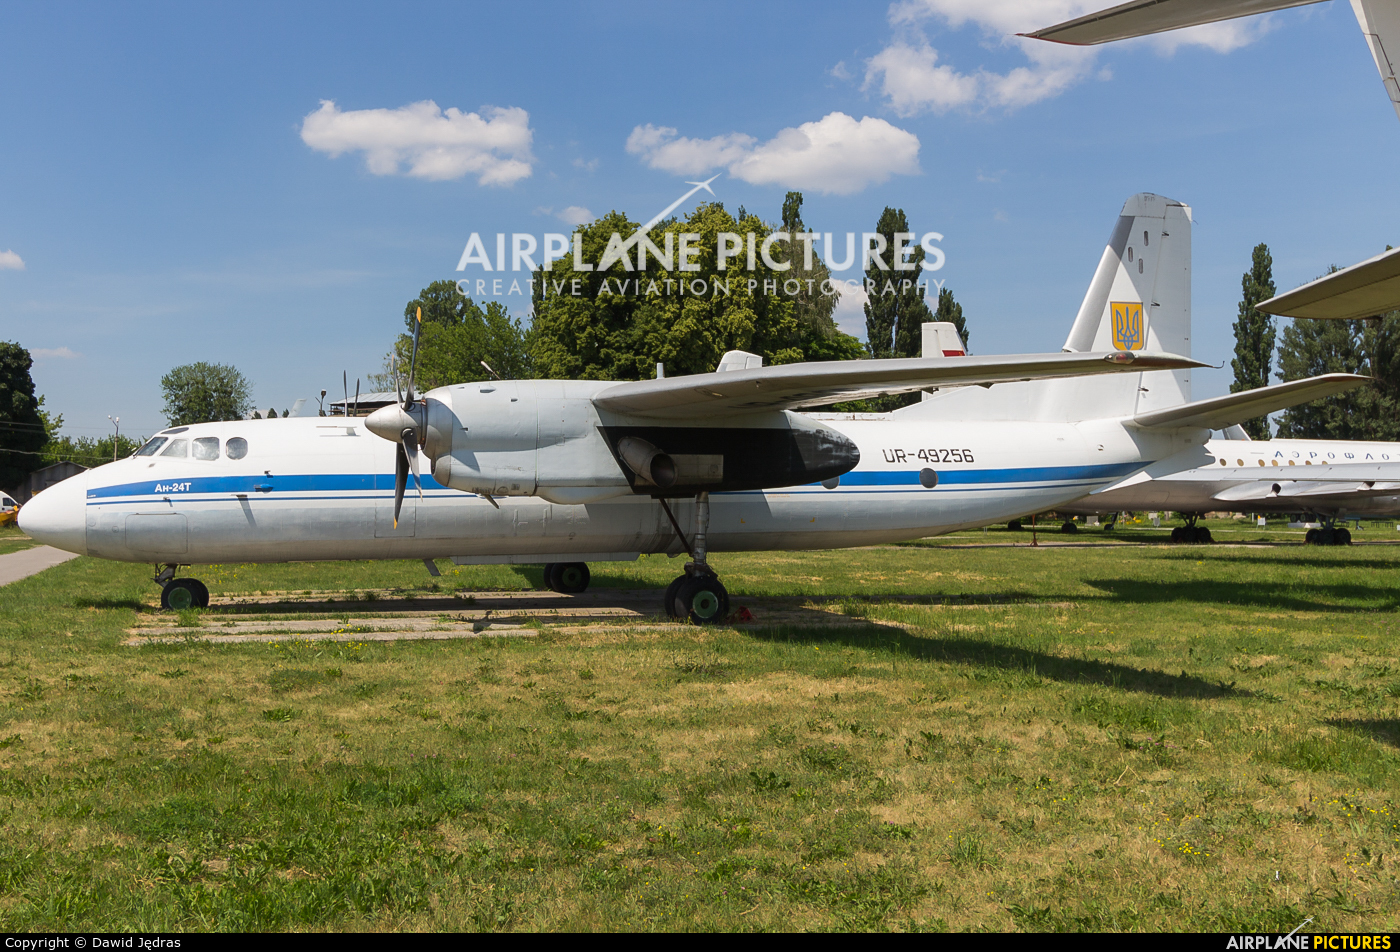 Ukraine - Air Force UR-49256 aircraft at Kyiv - Zhulyany State Aviation Museum